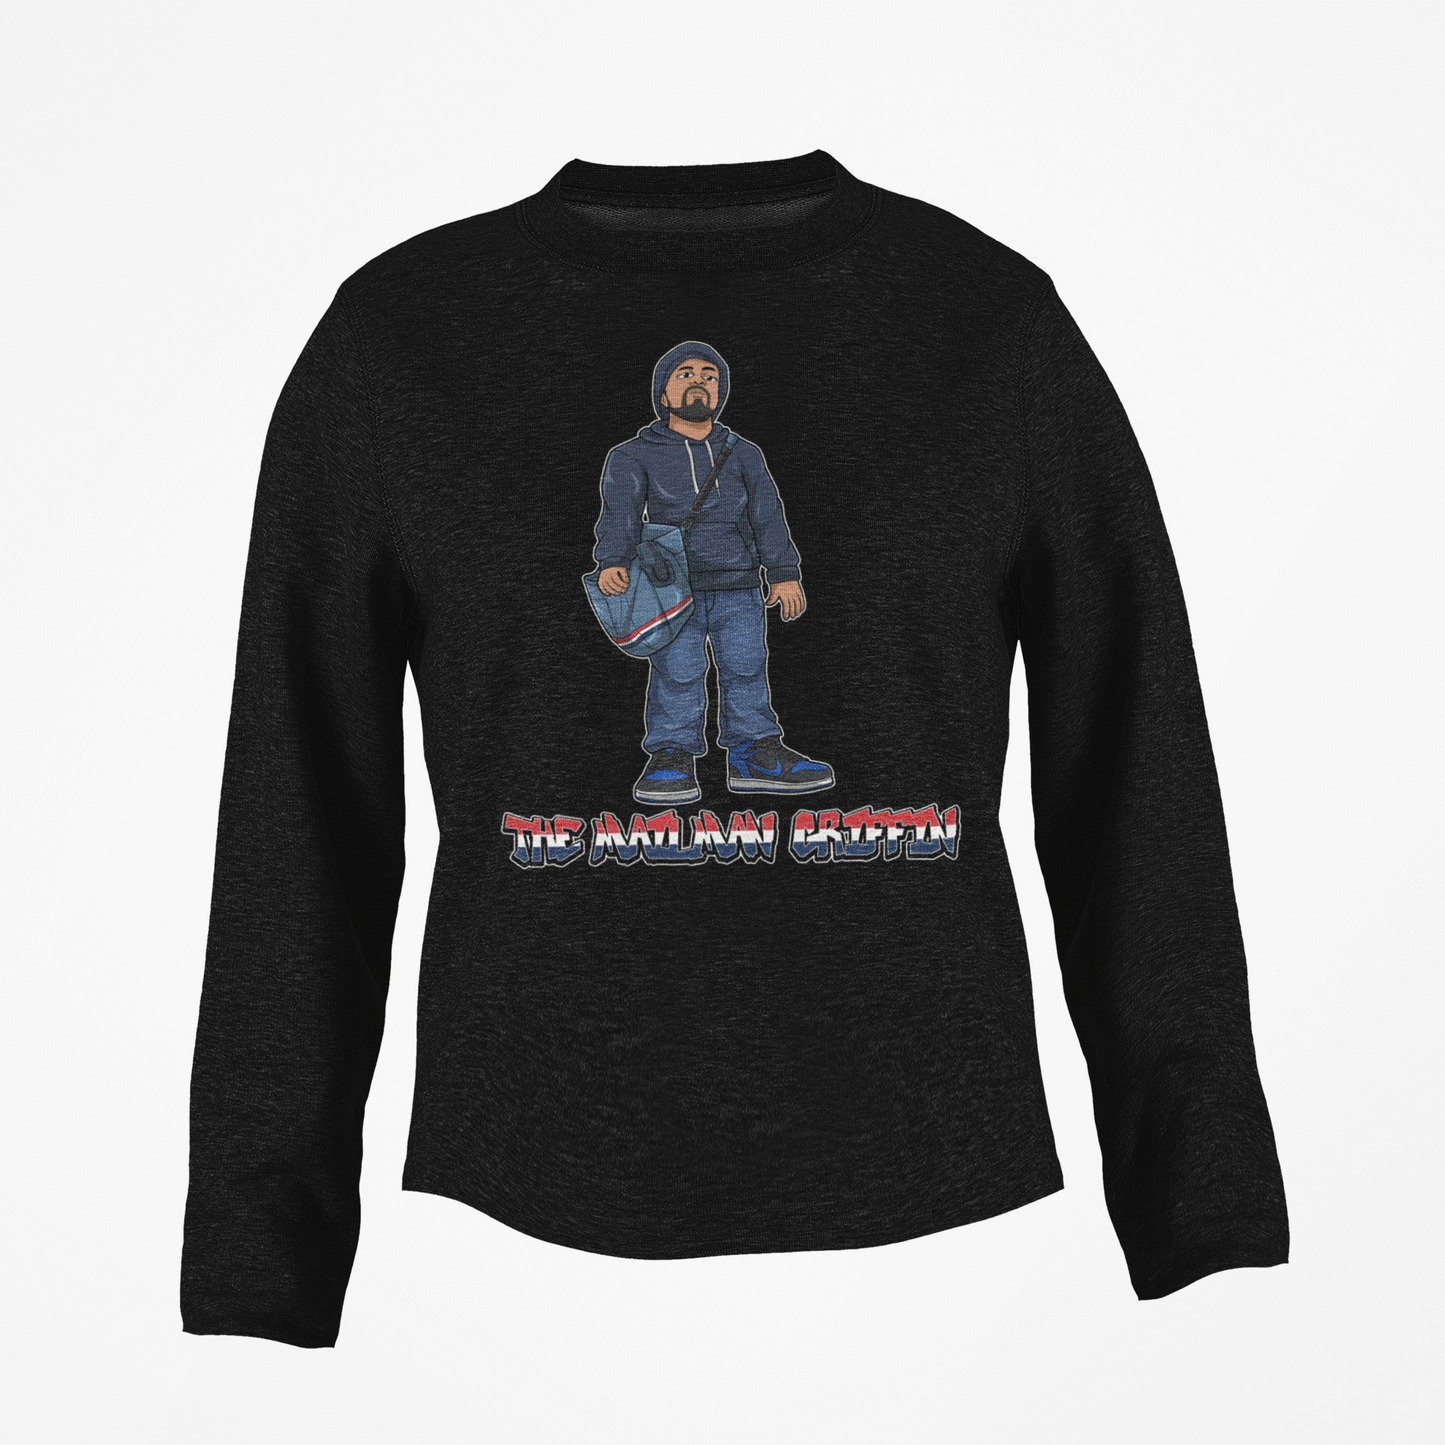 The Postal man Sweatshirt